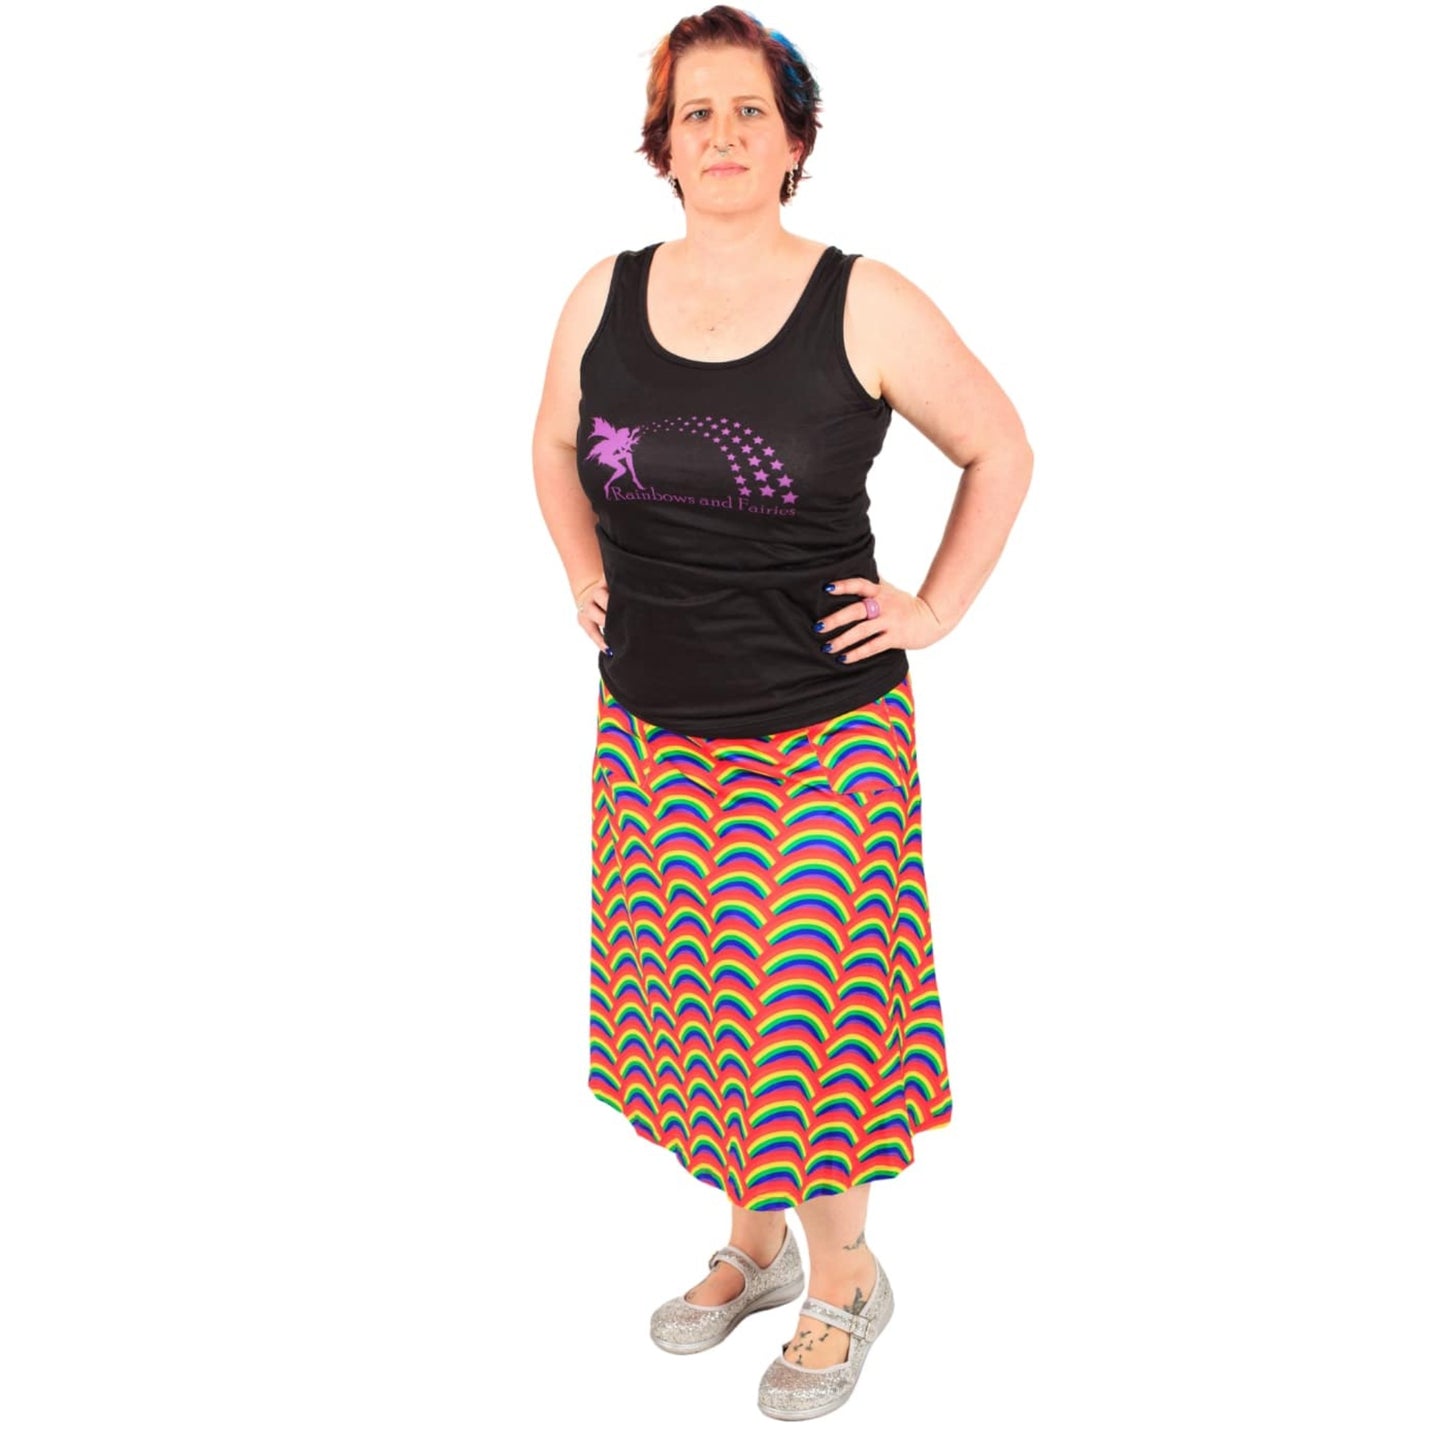 Rainbow Original Skirt by RainbowsAndFairies.com.au (Rainbows - Pride - Psychedelic - Skirt With Pockets - Kitsch) - SKU: CL_OSKRT_RAINB_ORG - Pic-02